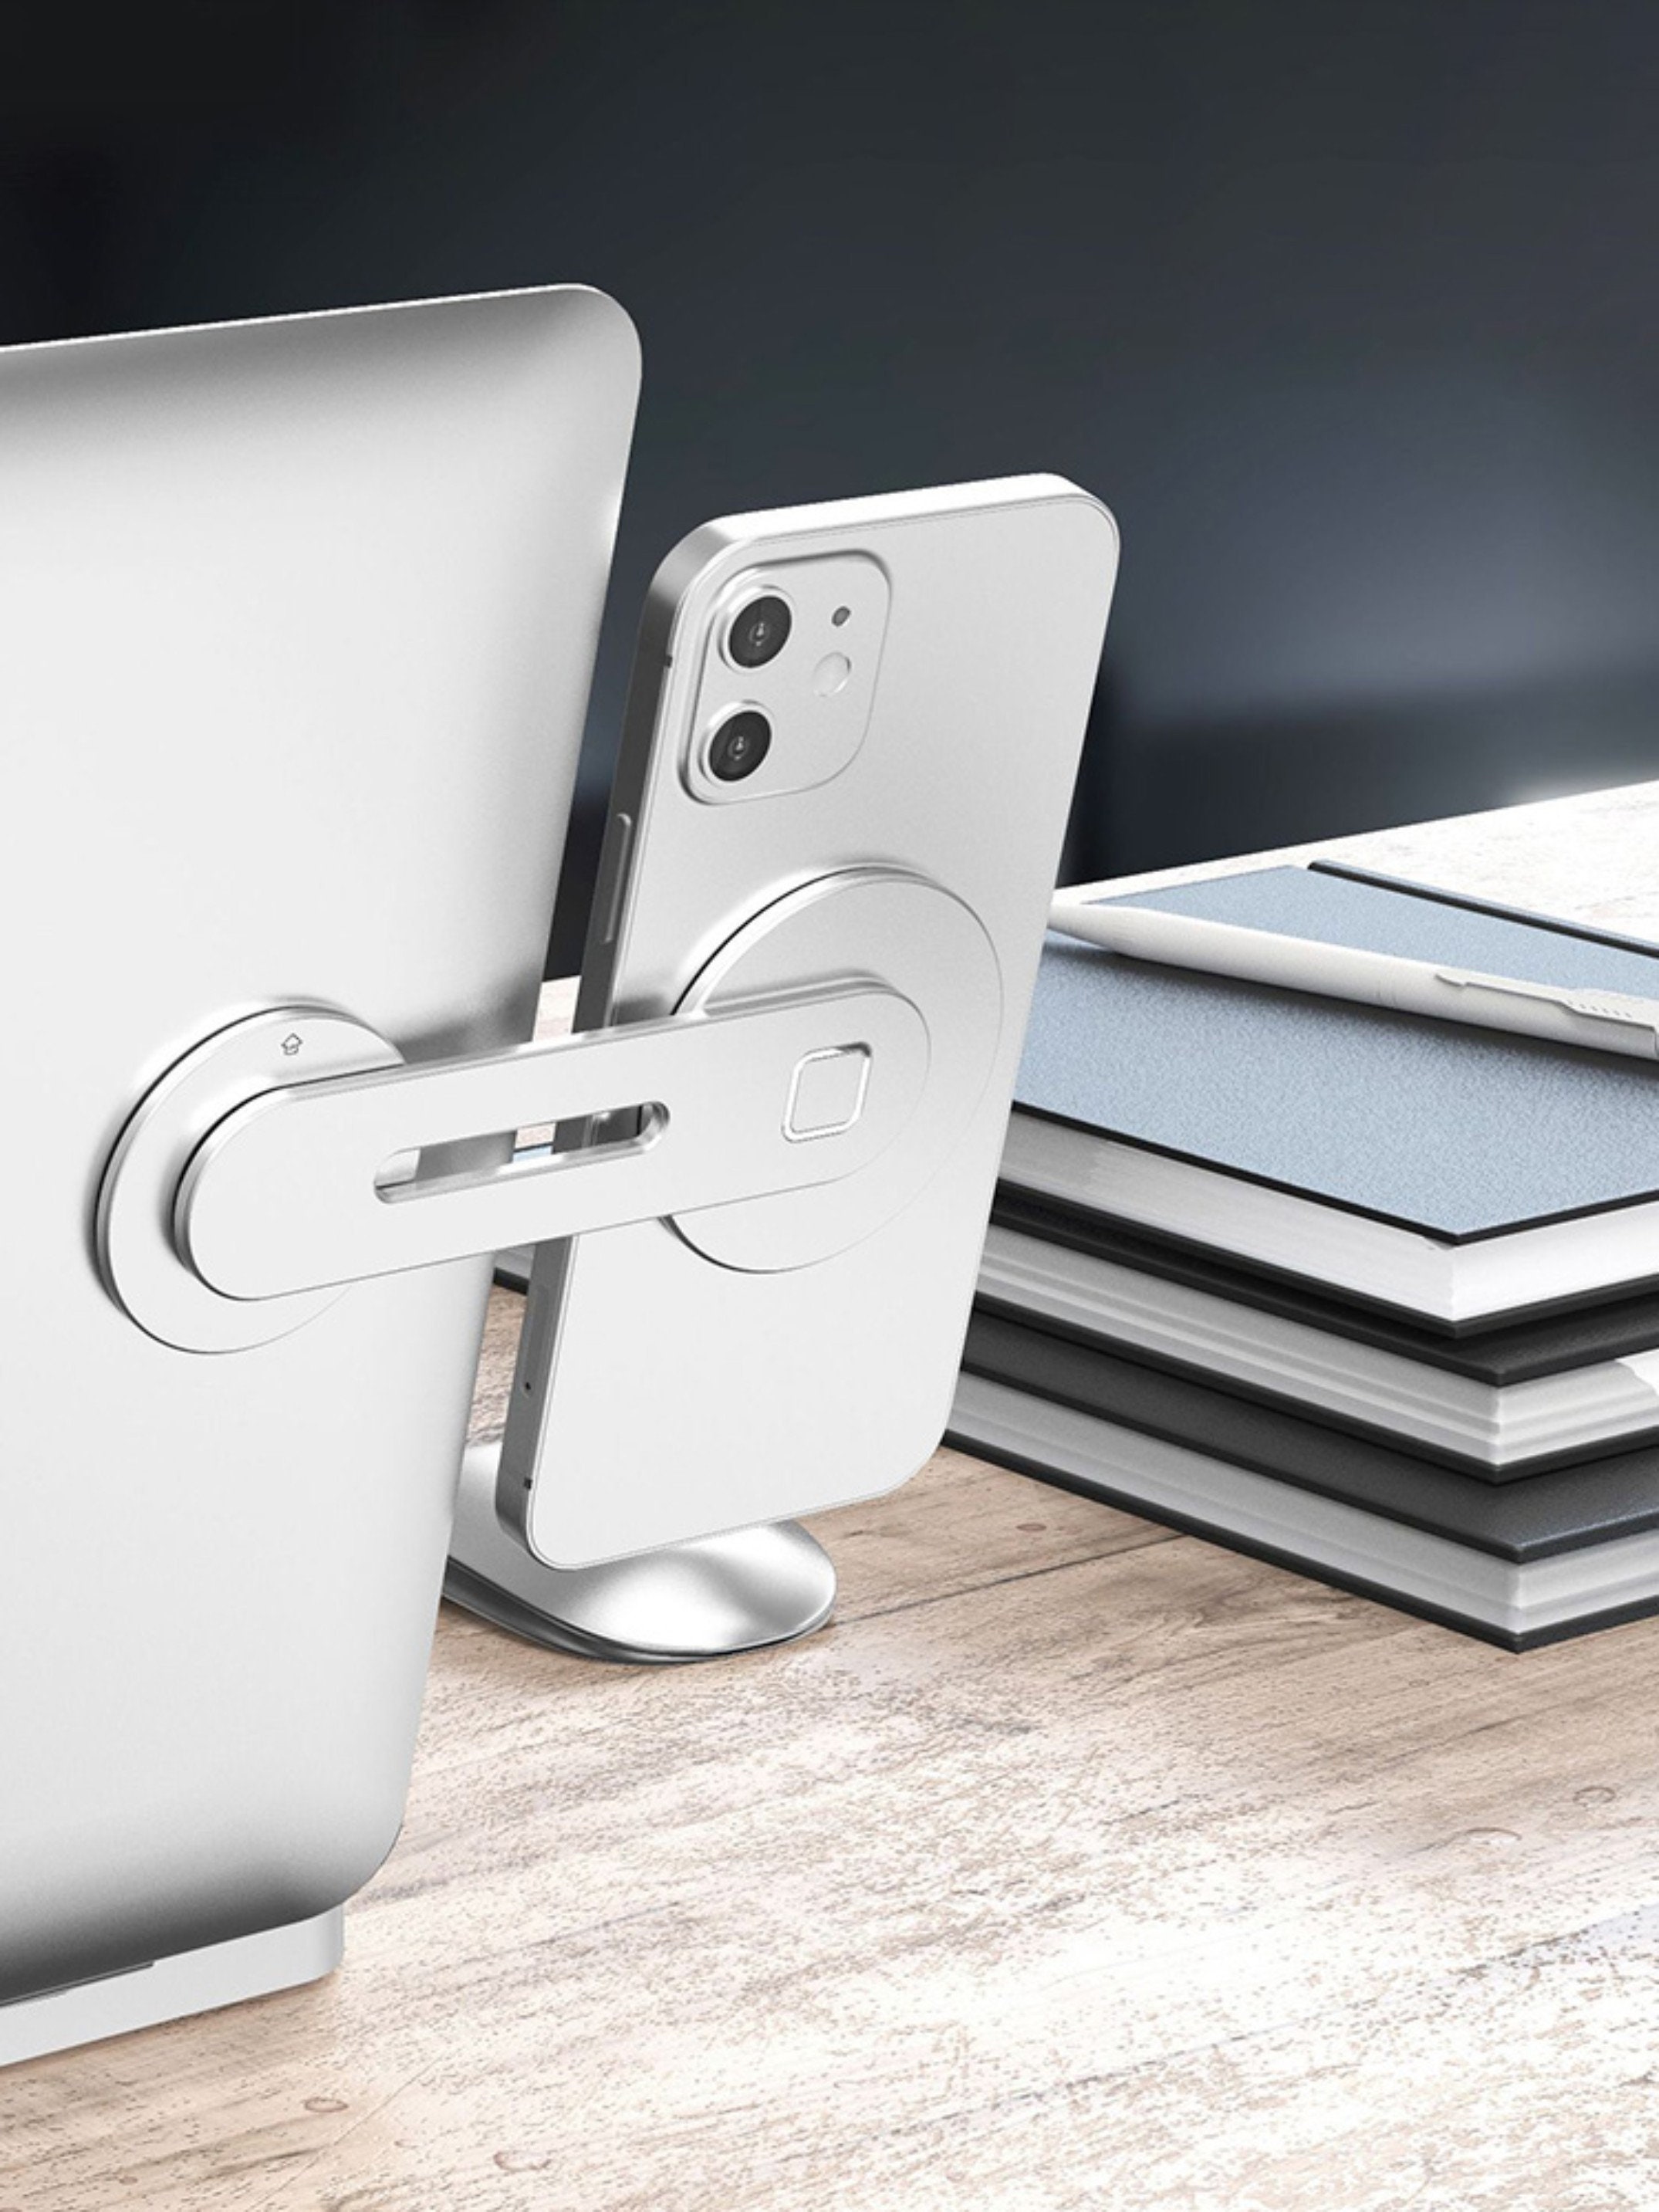  CloudValley Magnetic Phone Holder for Laptop Designed